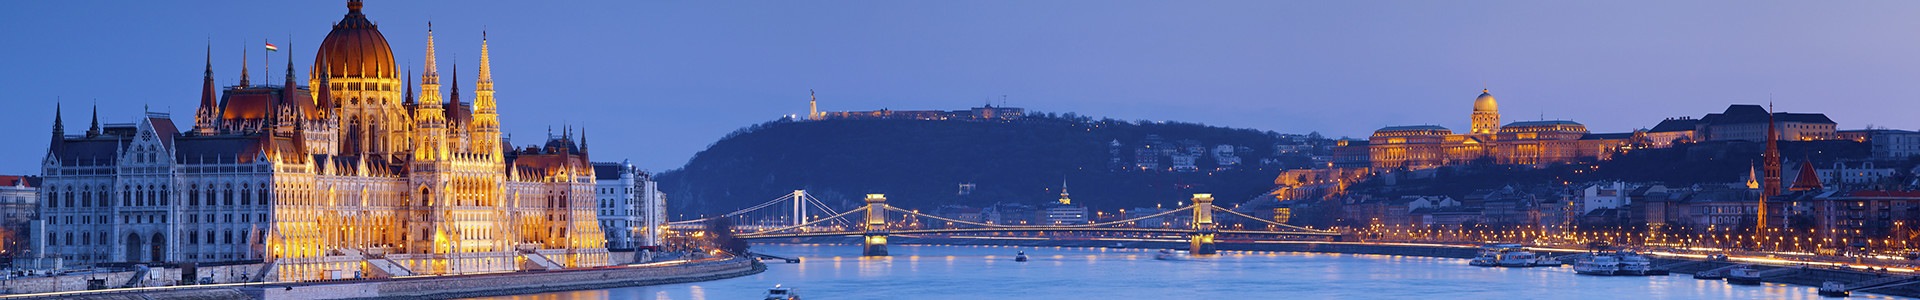 Vol Budapest - TUI